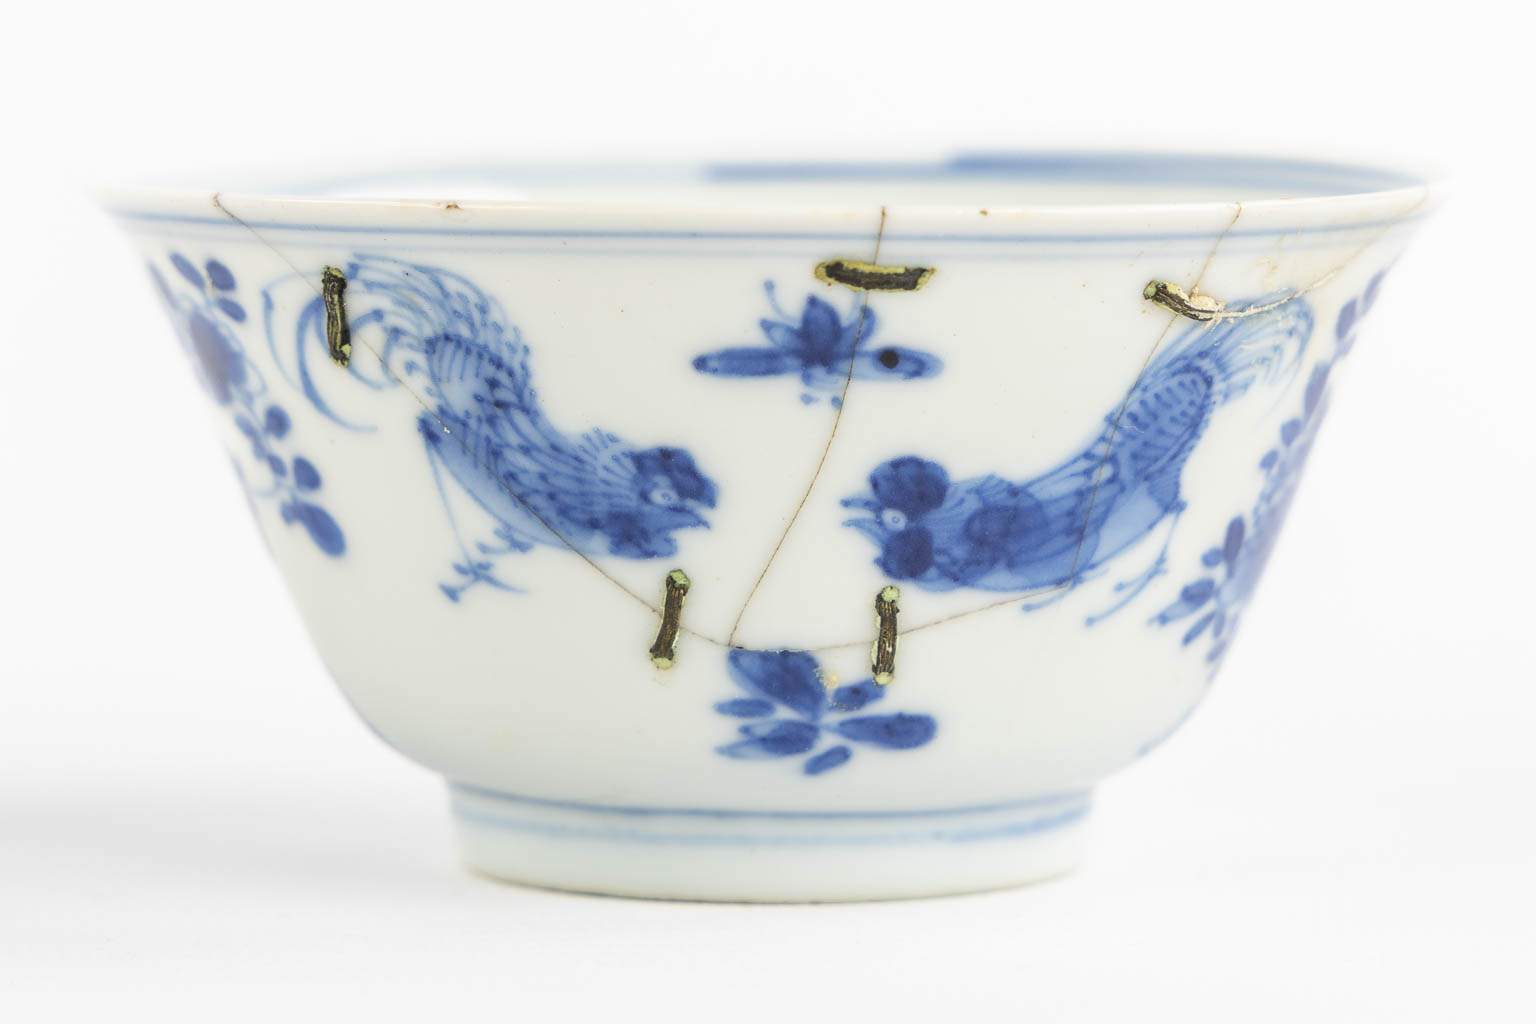 Seven cups and a saucer, Chinese porcelain, Kangxi, Yongzheng and Qianlong period. 18th C. (H:4,5 x D:8,7 cm)